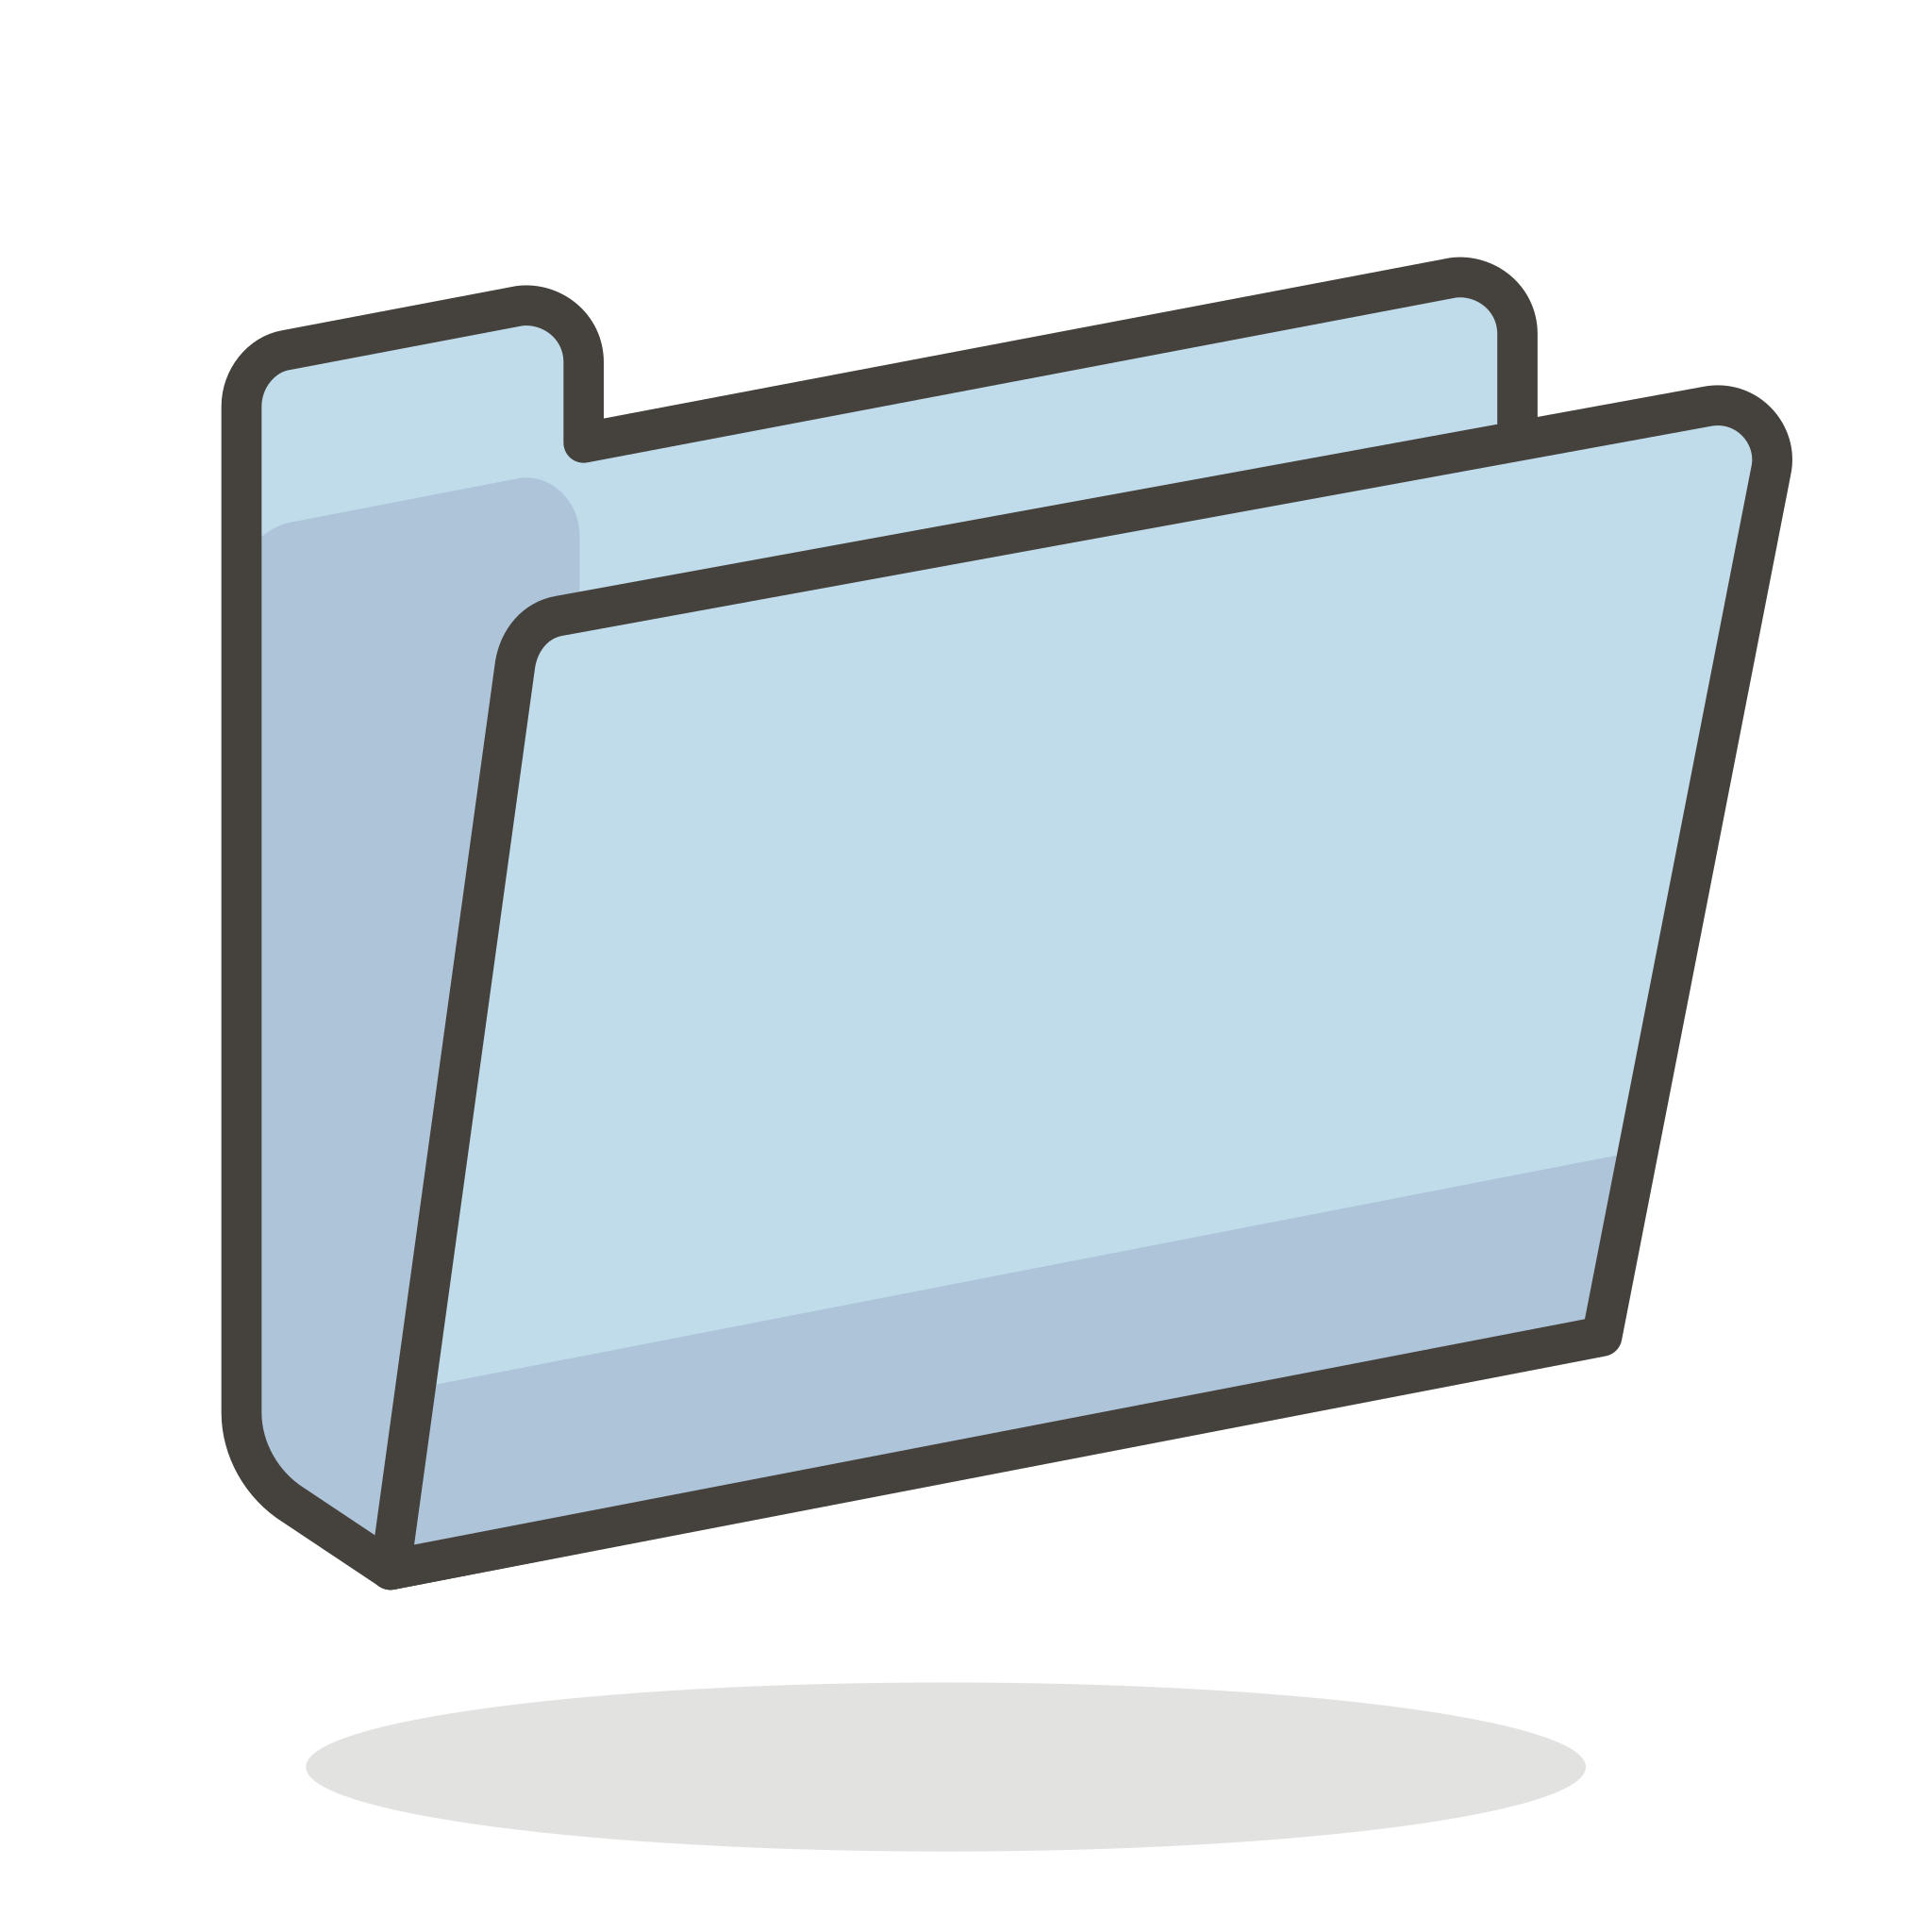 An open file folder